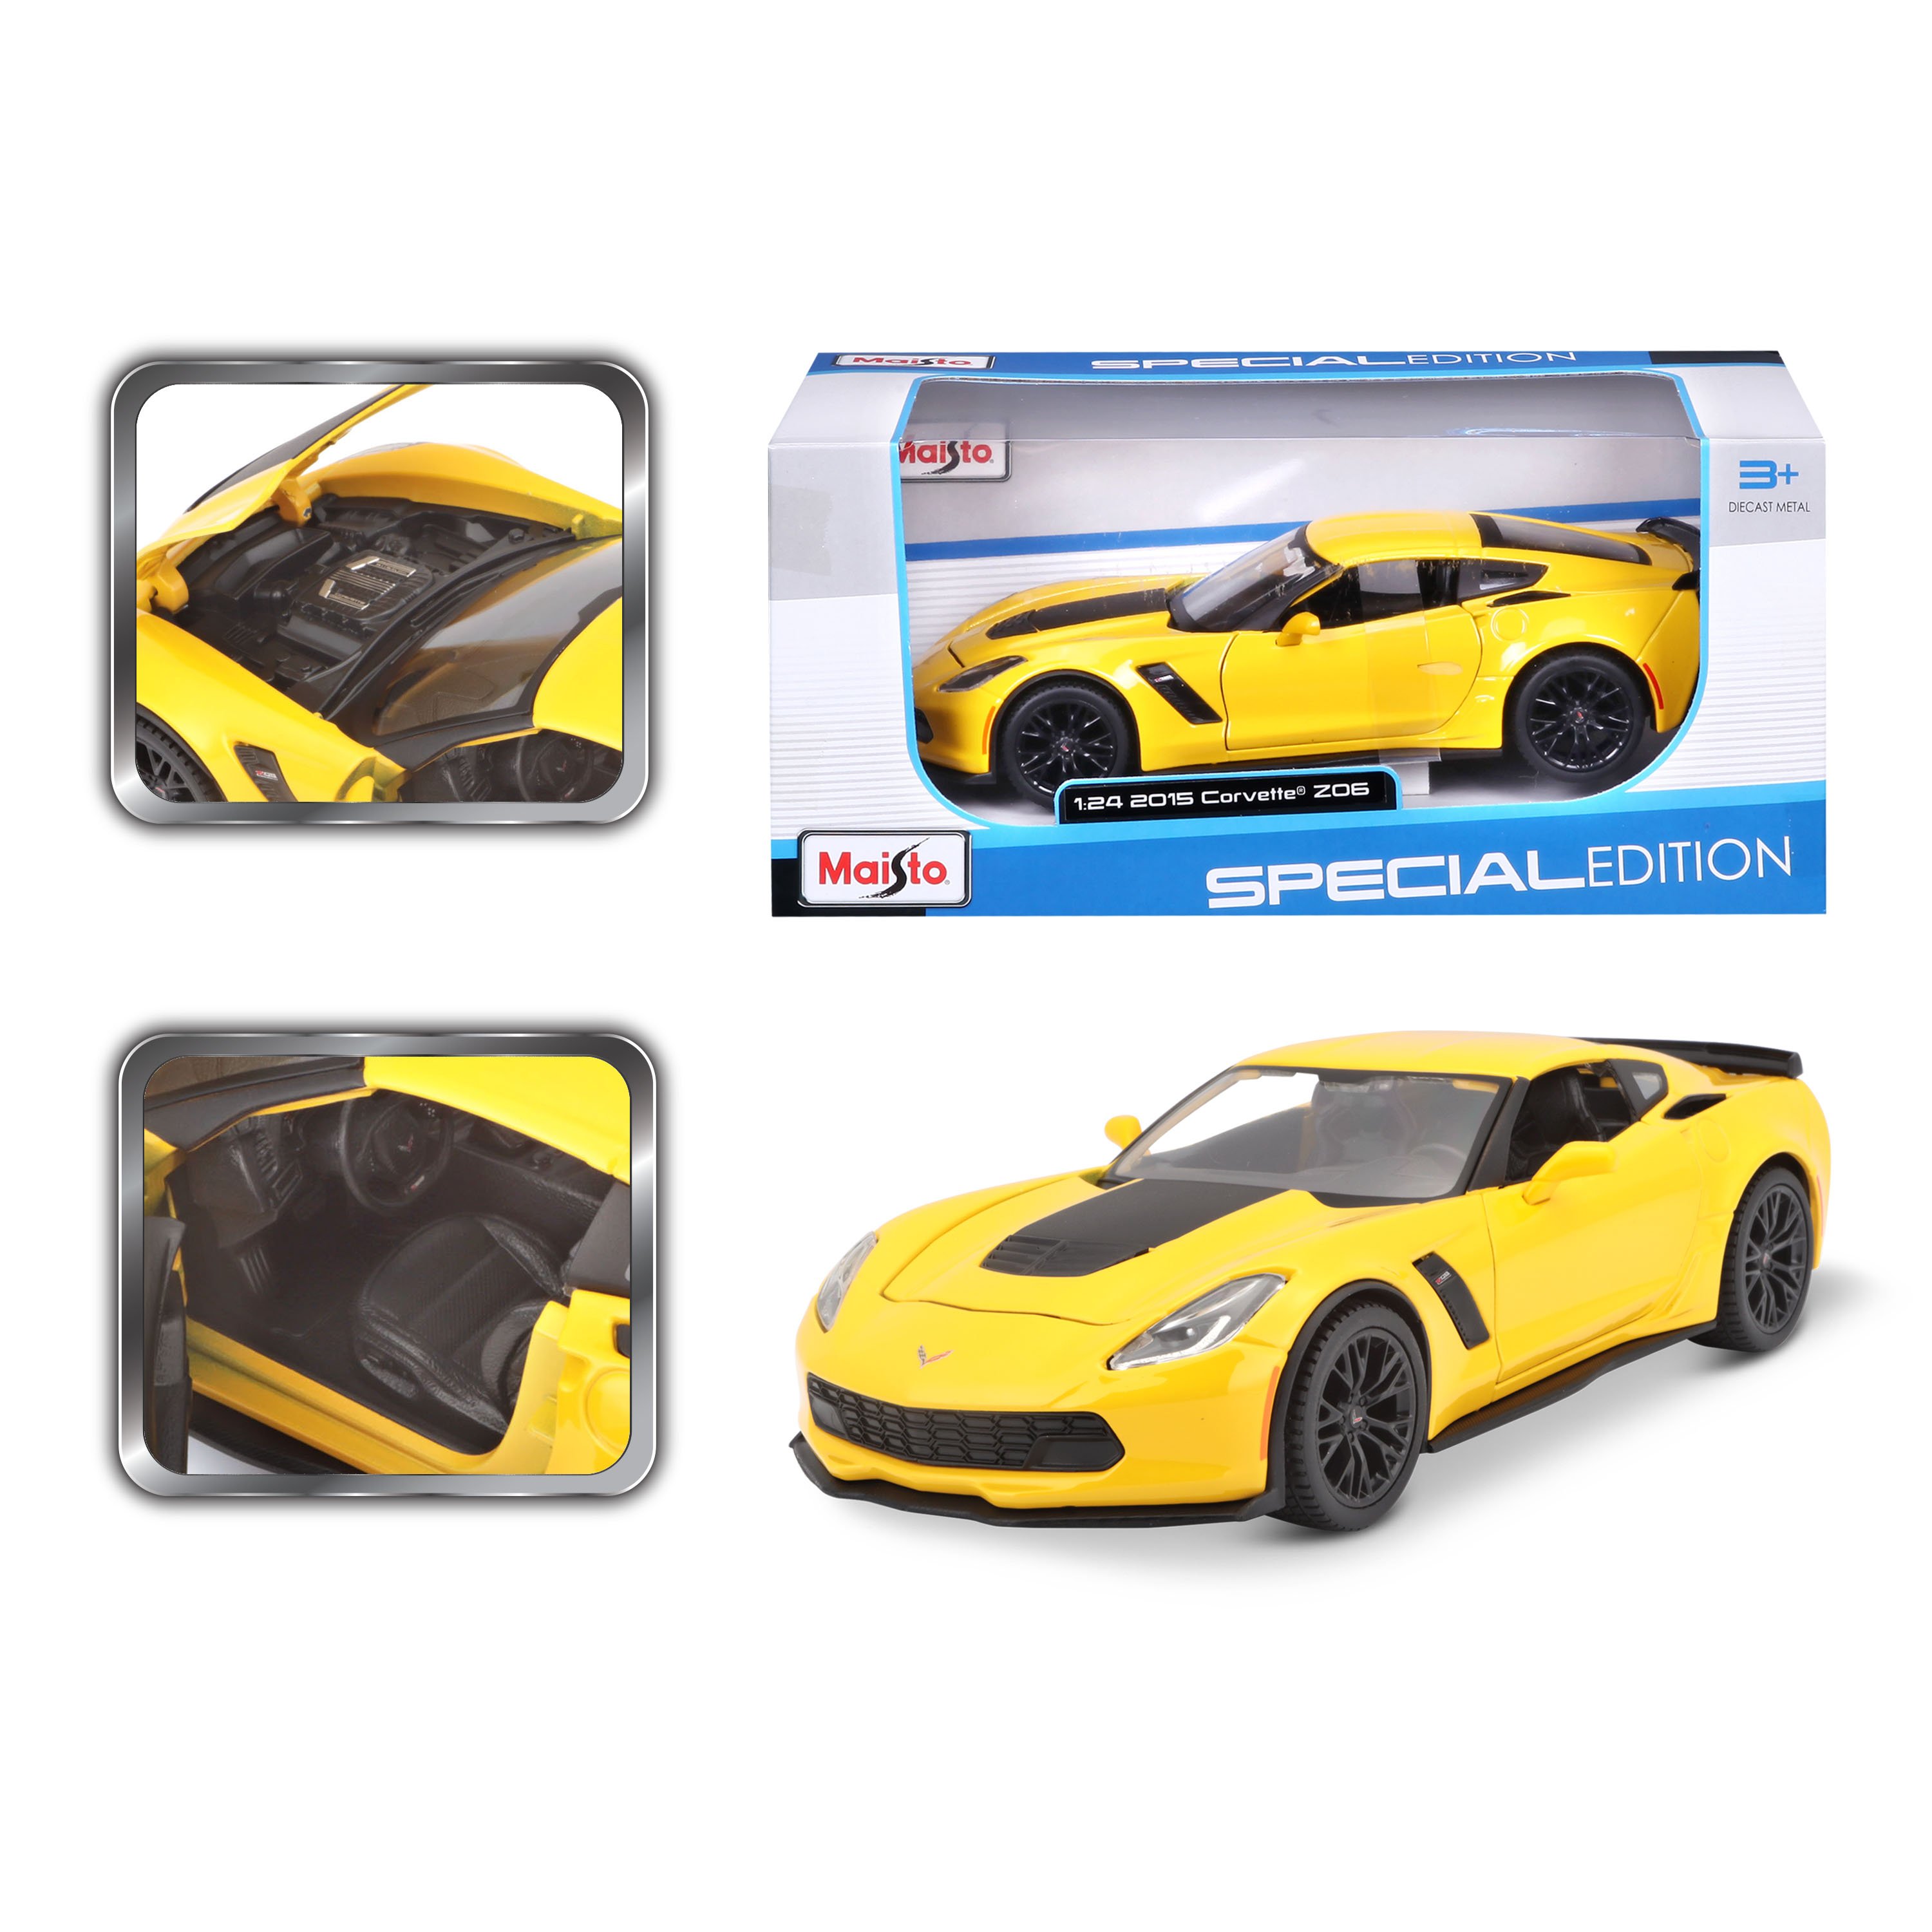 Игровая автомодель Maisto 2015 Chevrolet Corvette Z06 желтый, 1:24 (31133 yellow) - фото 7